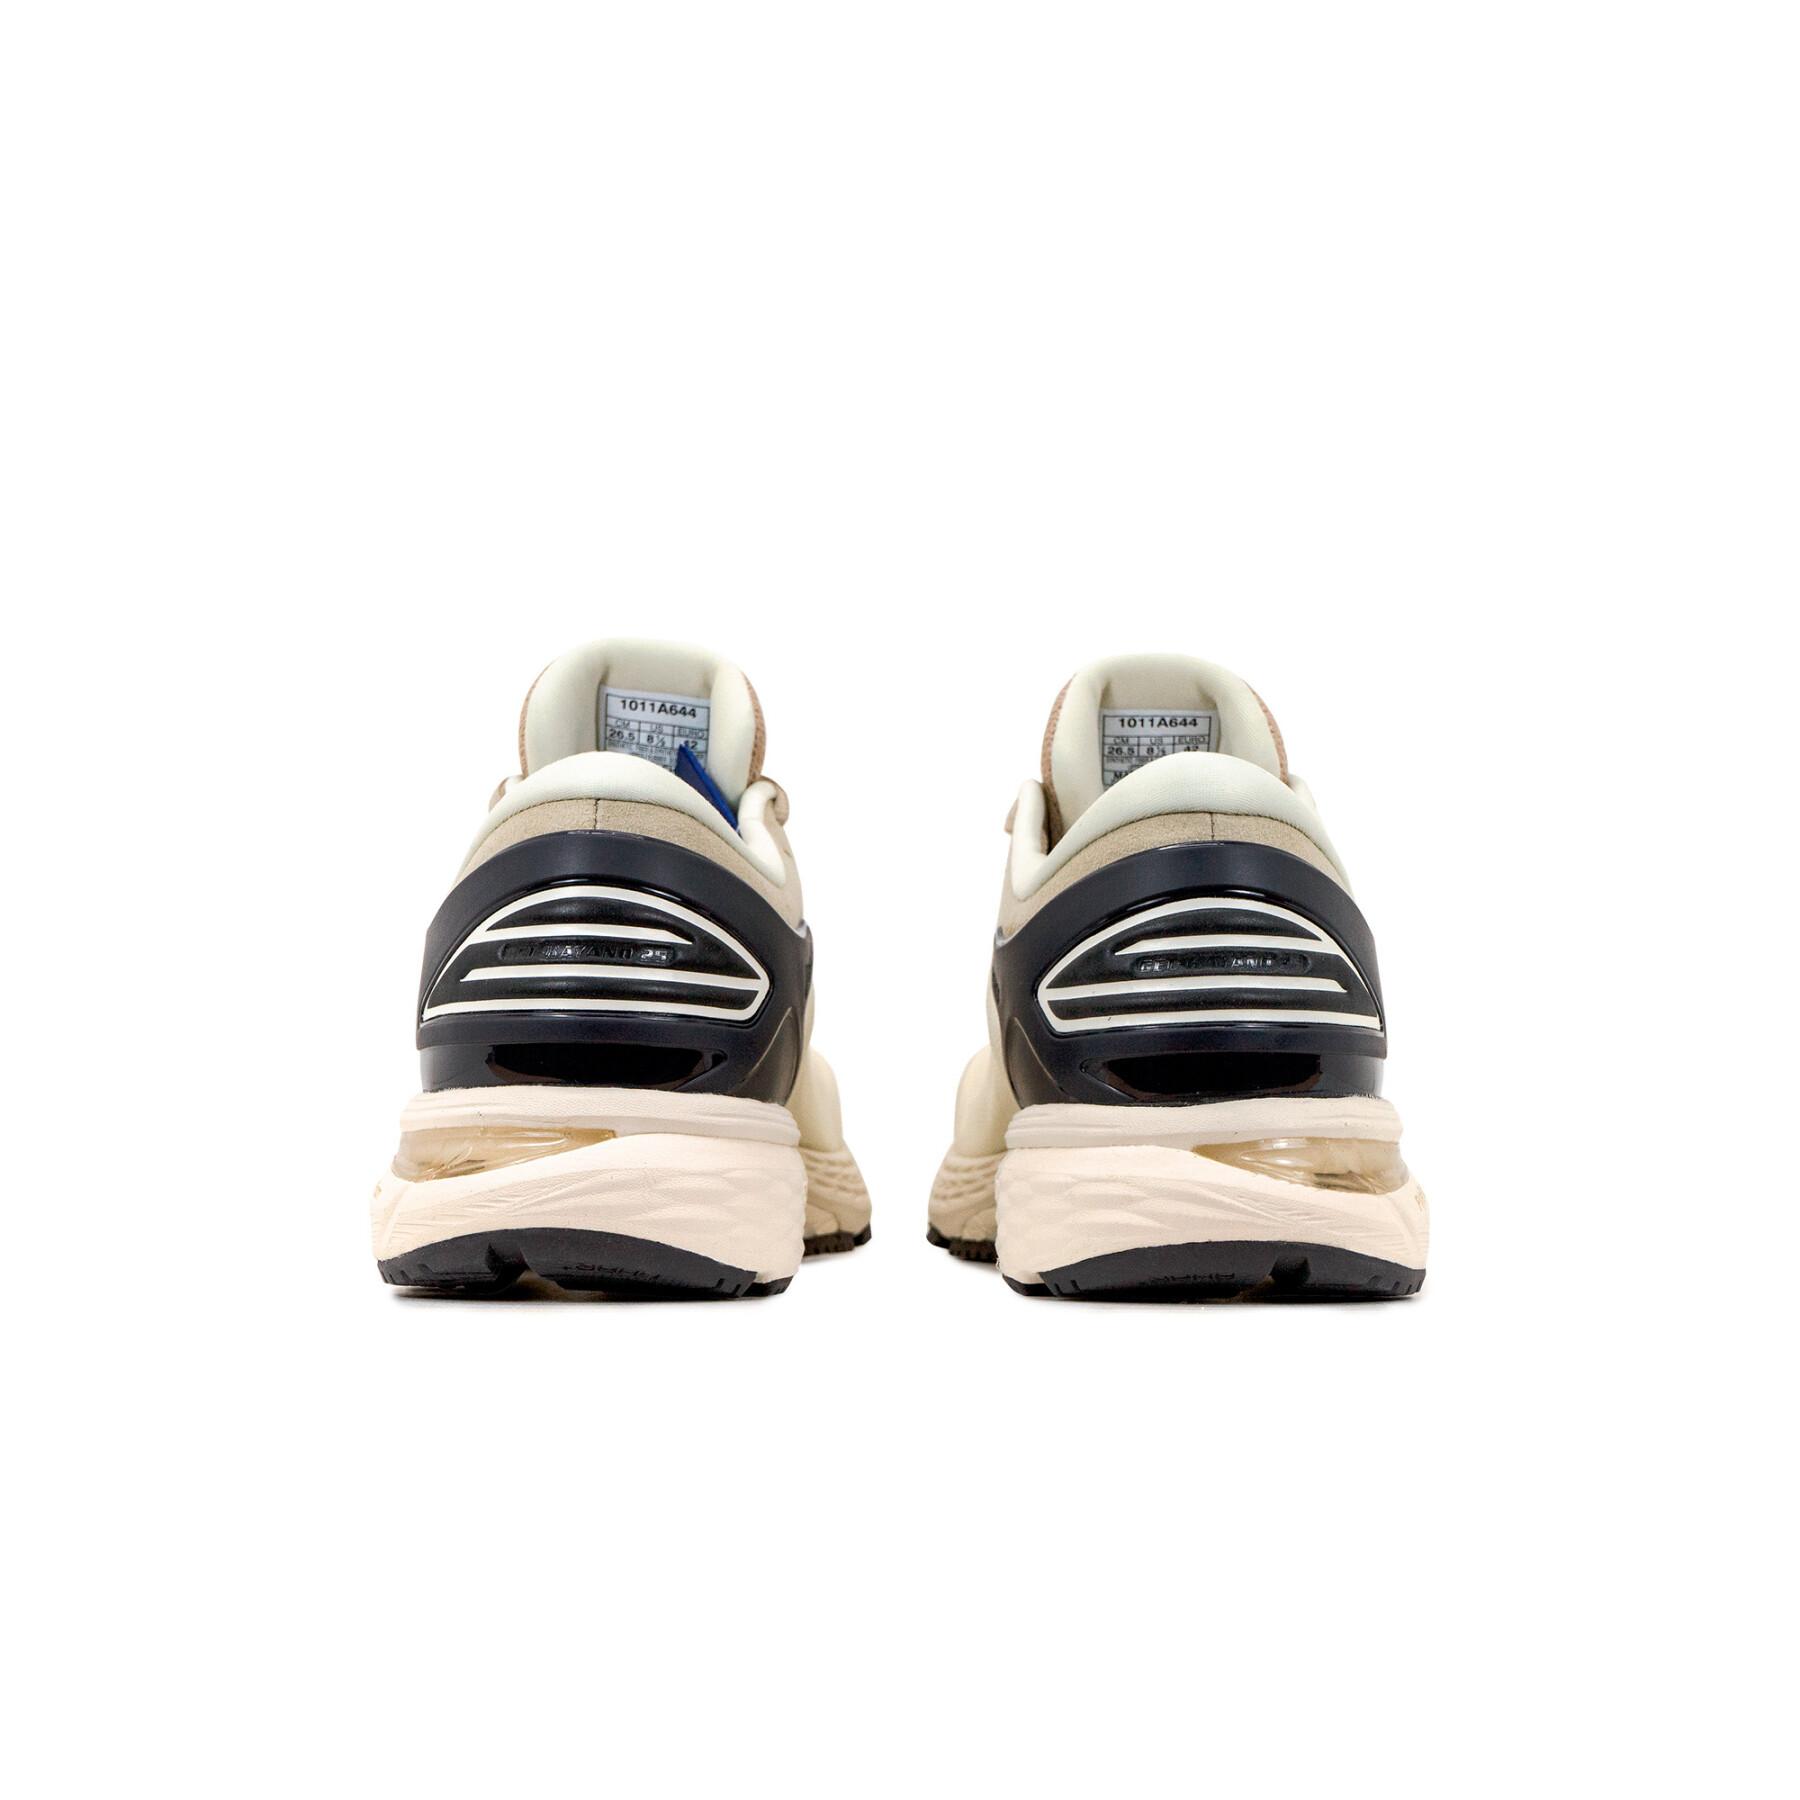 Zapatos Asics Gel-kayano 25